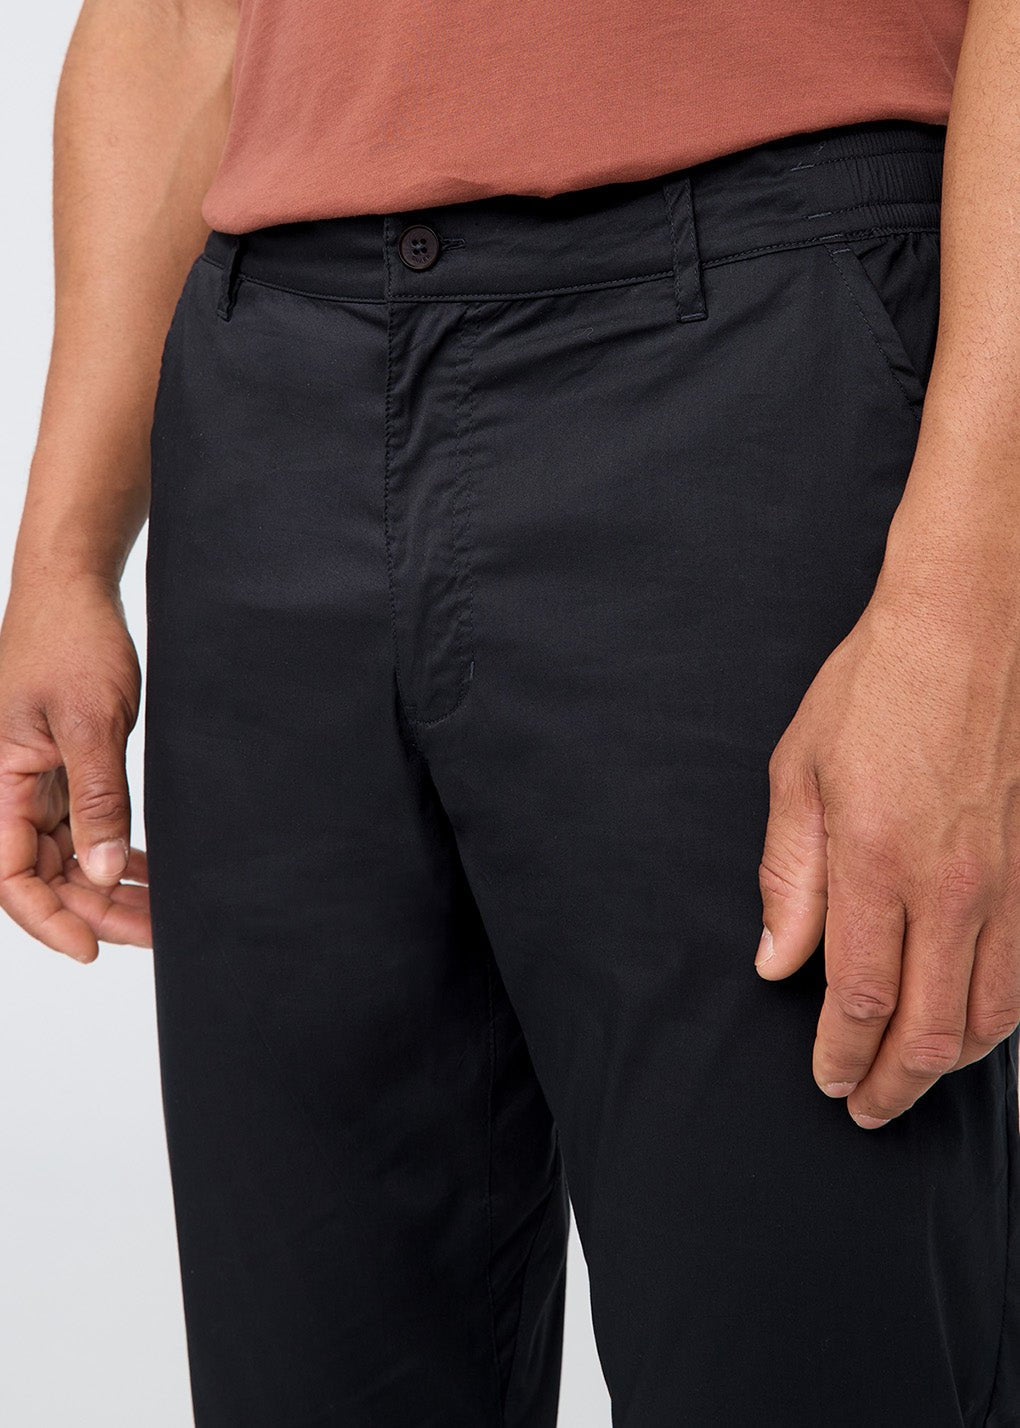 mens black lightweight summer travel pants front detail